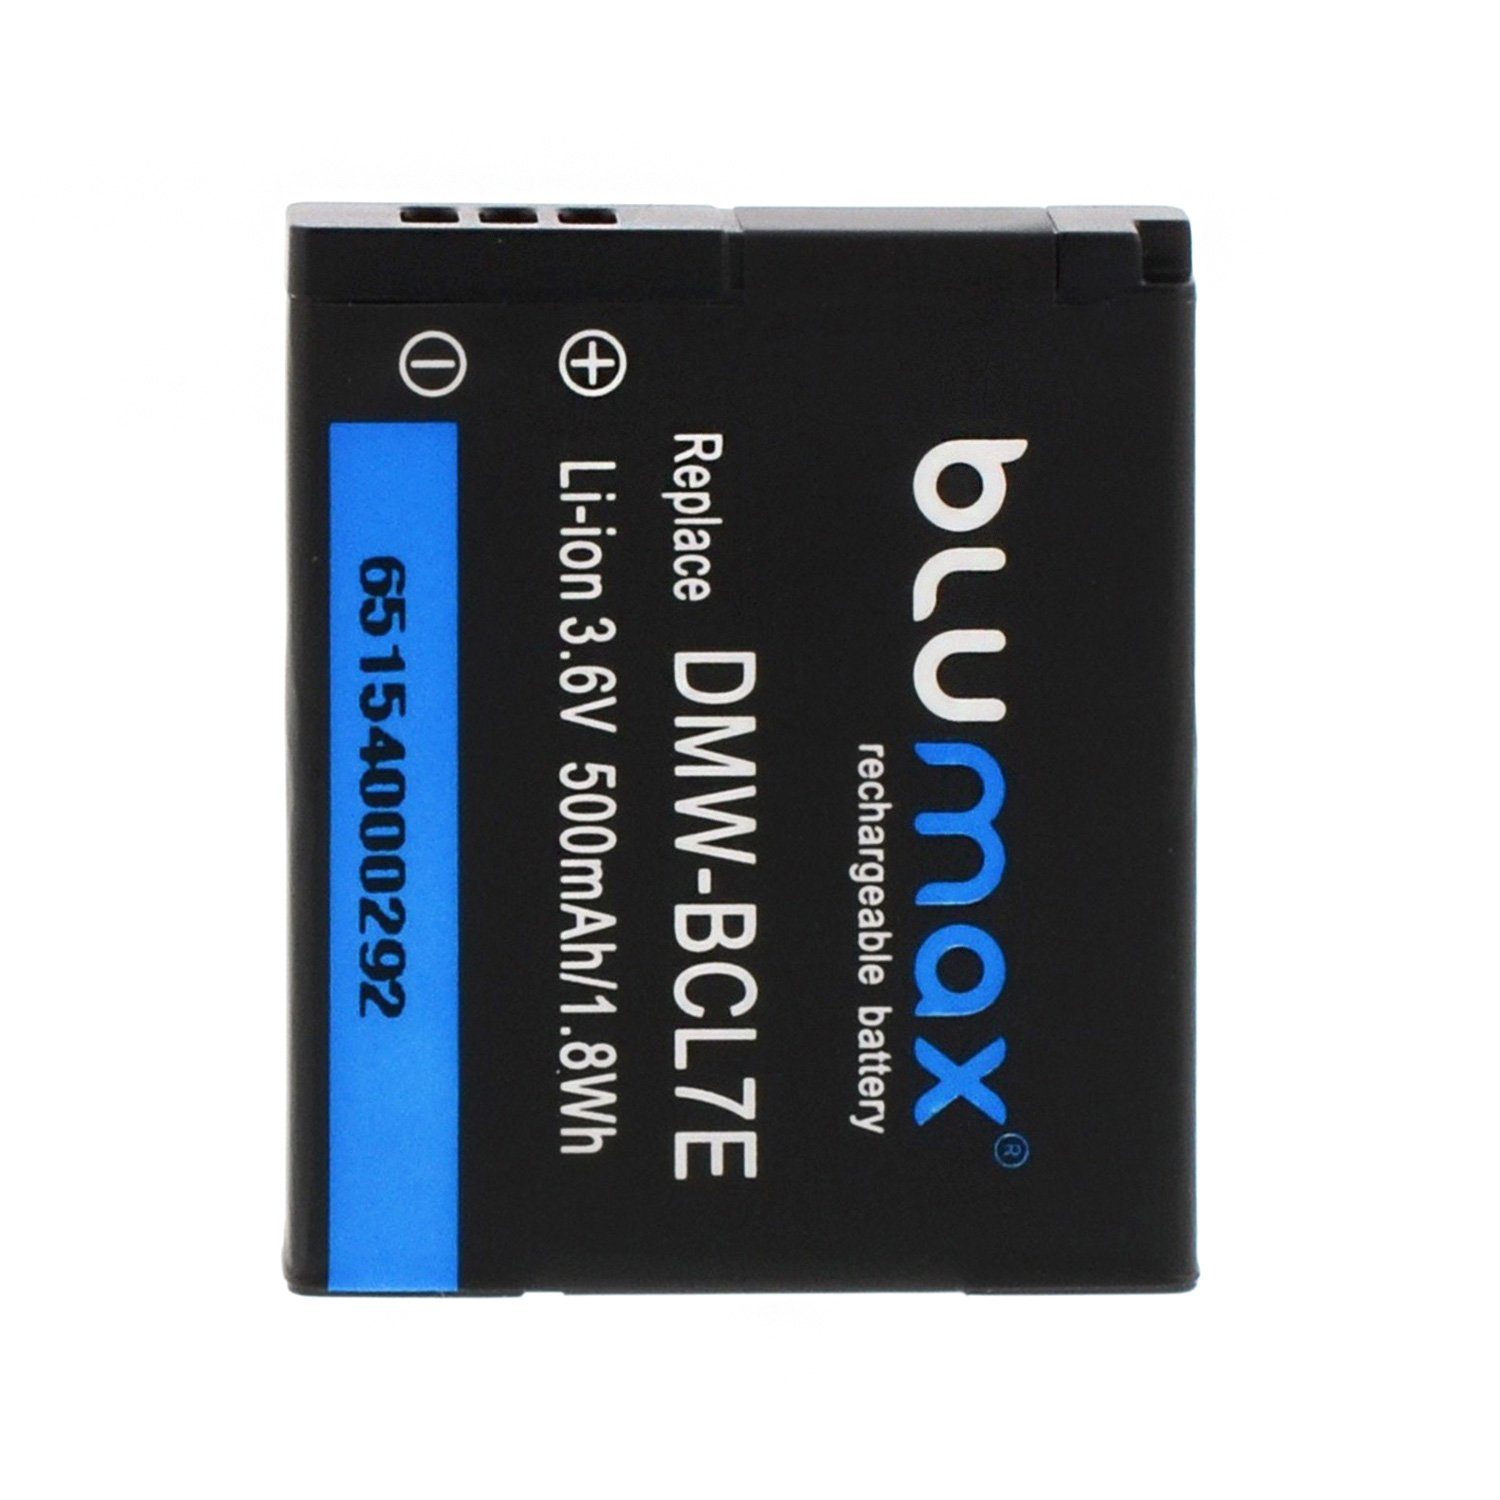 Blumax Akku passend DMW-BCL7 500 Panasonic (3,6V) für mAh Kamera-Akku